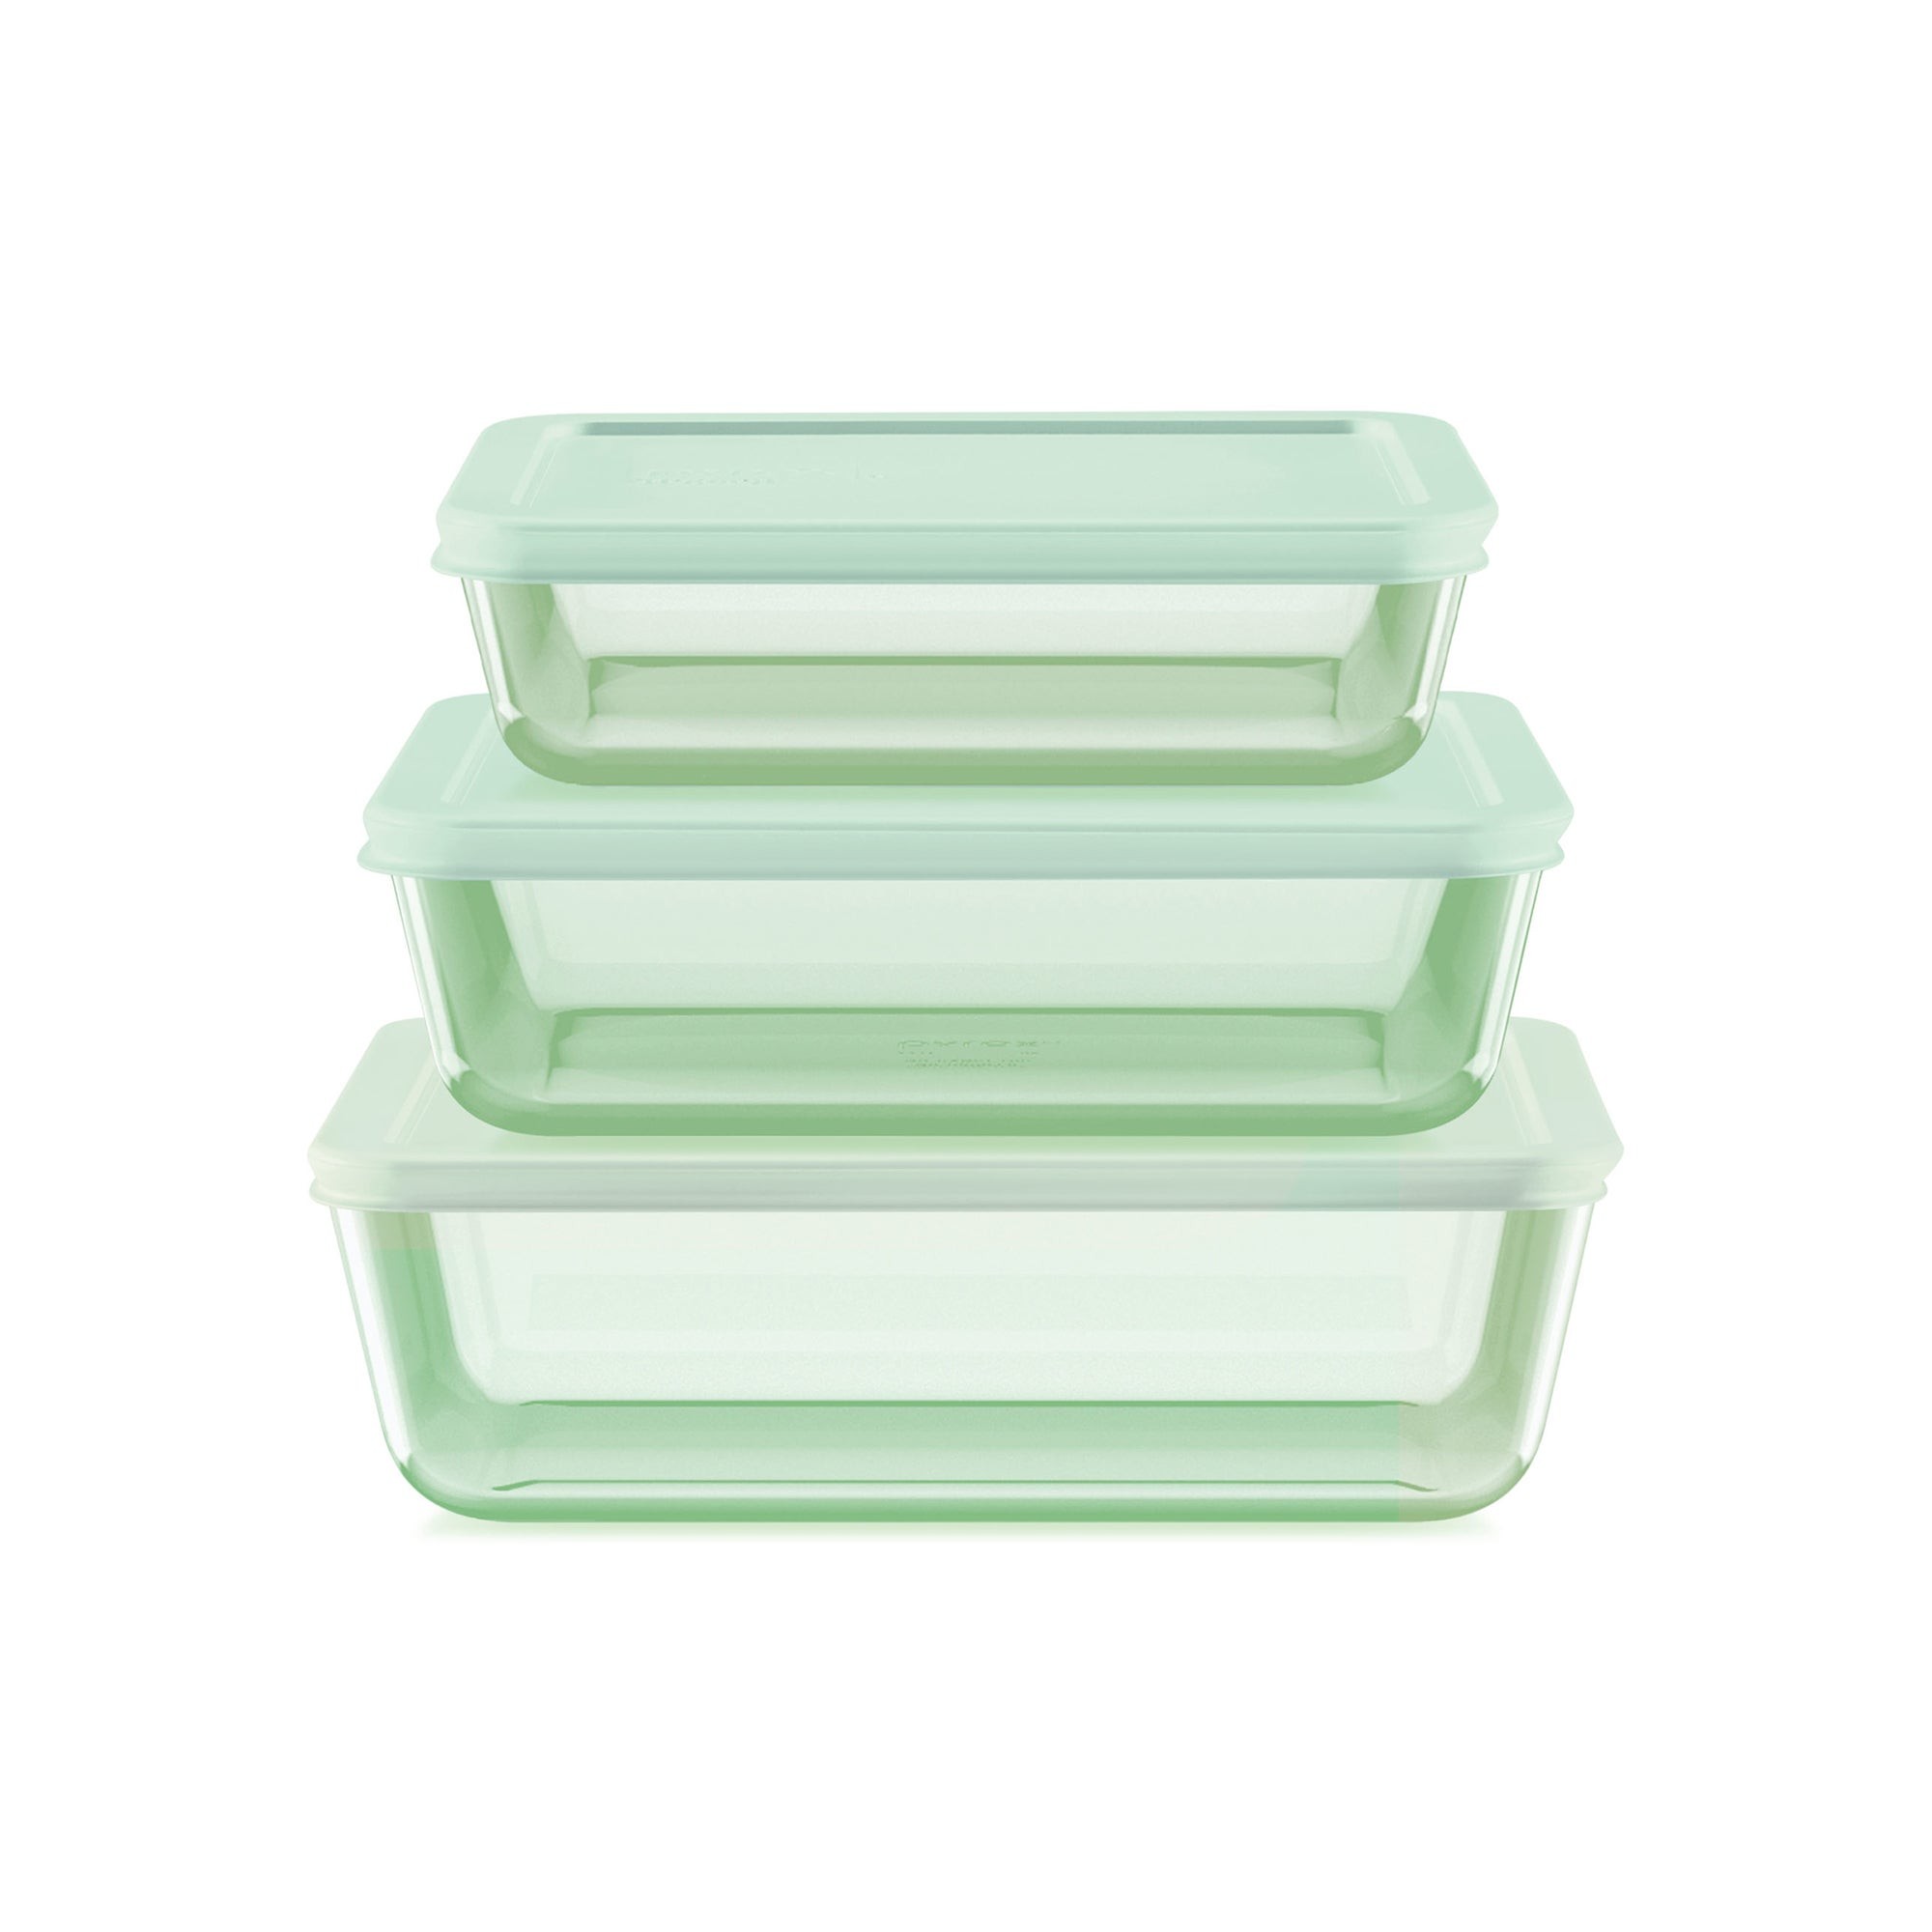 6pc Simply Store Rectangular Tinted Glass Food Storage Set Green Lids